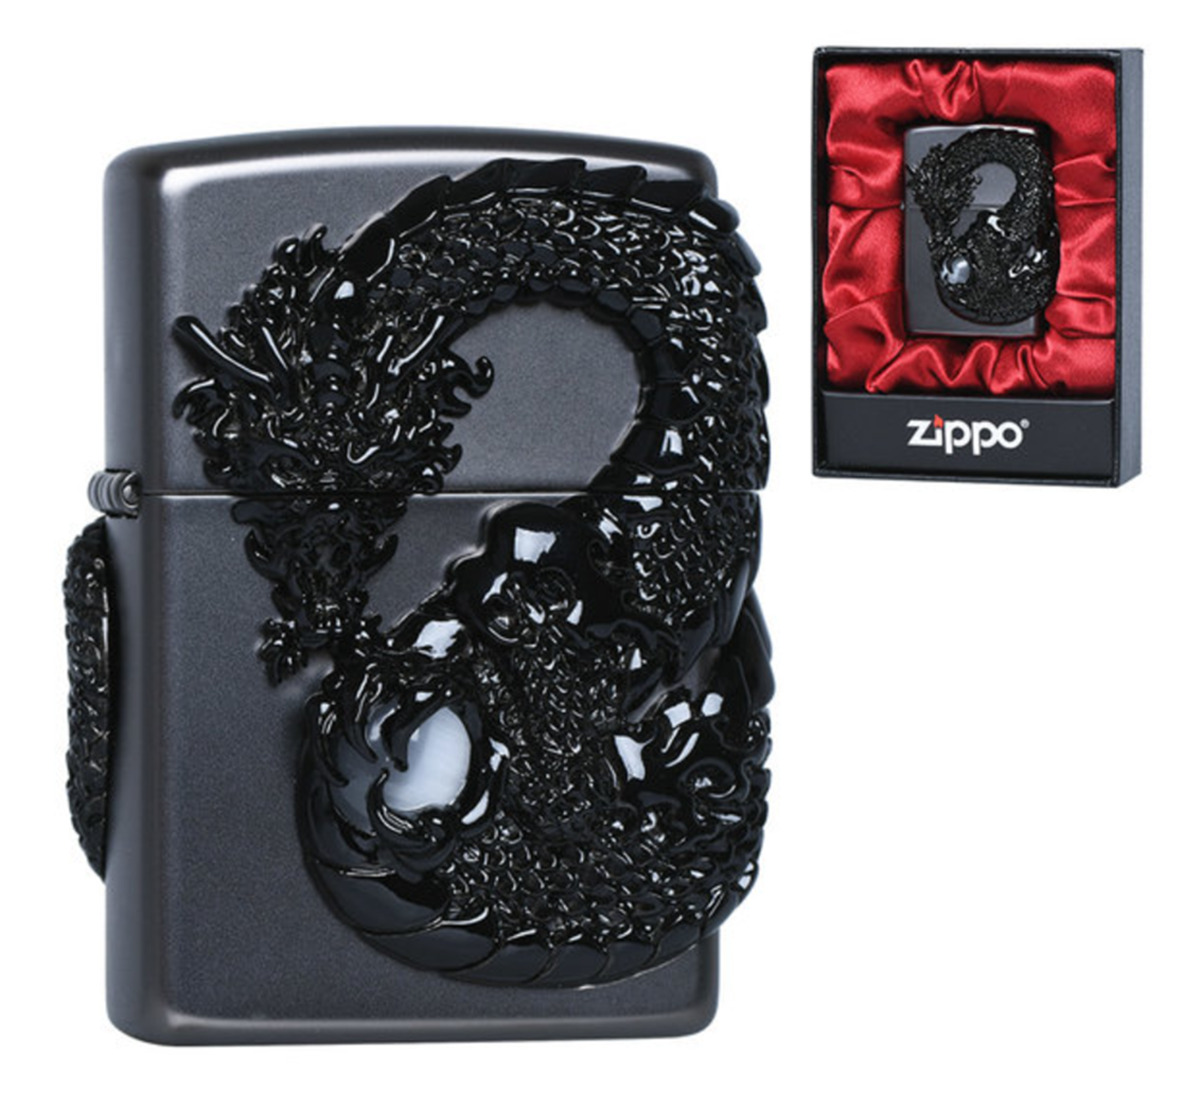 Zippo Lighter Black Dragon Genuine Windproof  6 Flints New In Box